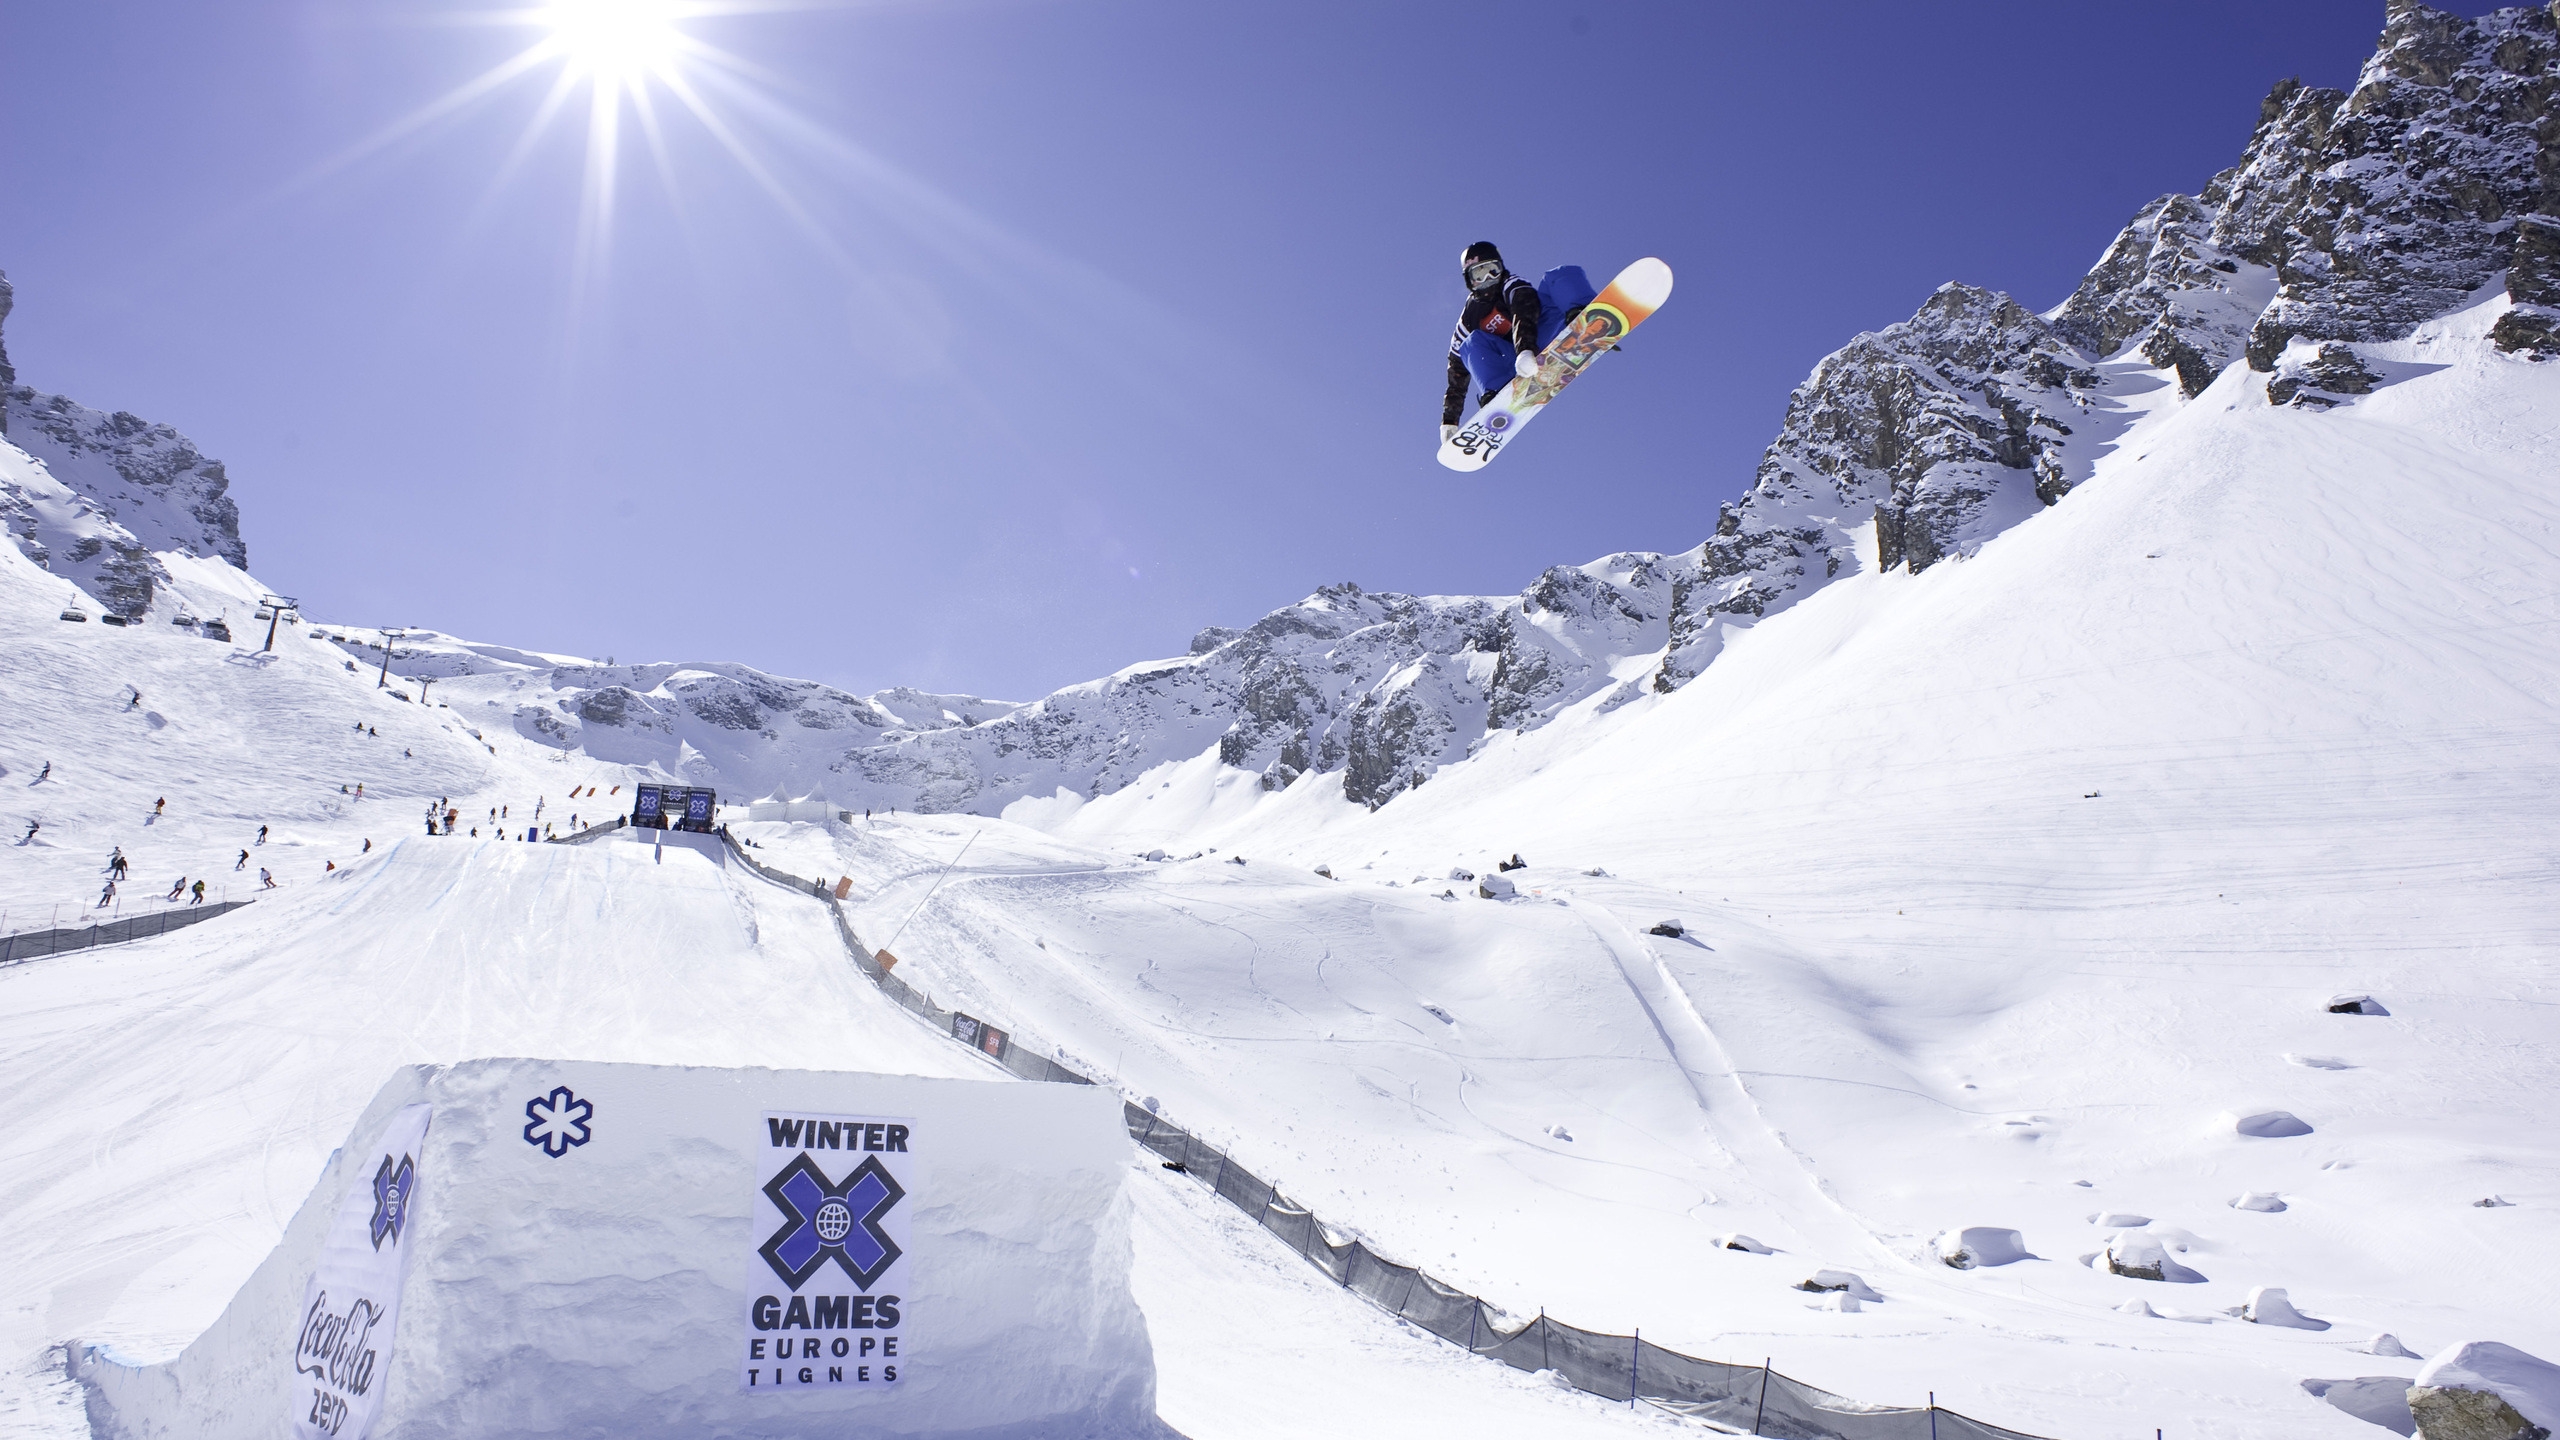 Snowboarding Season for 2560x1440 HDTV resolution